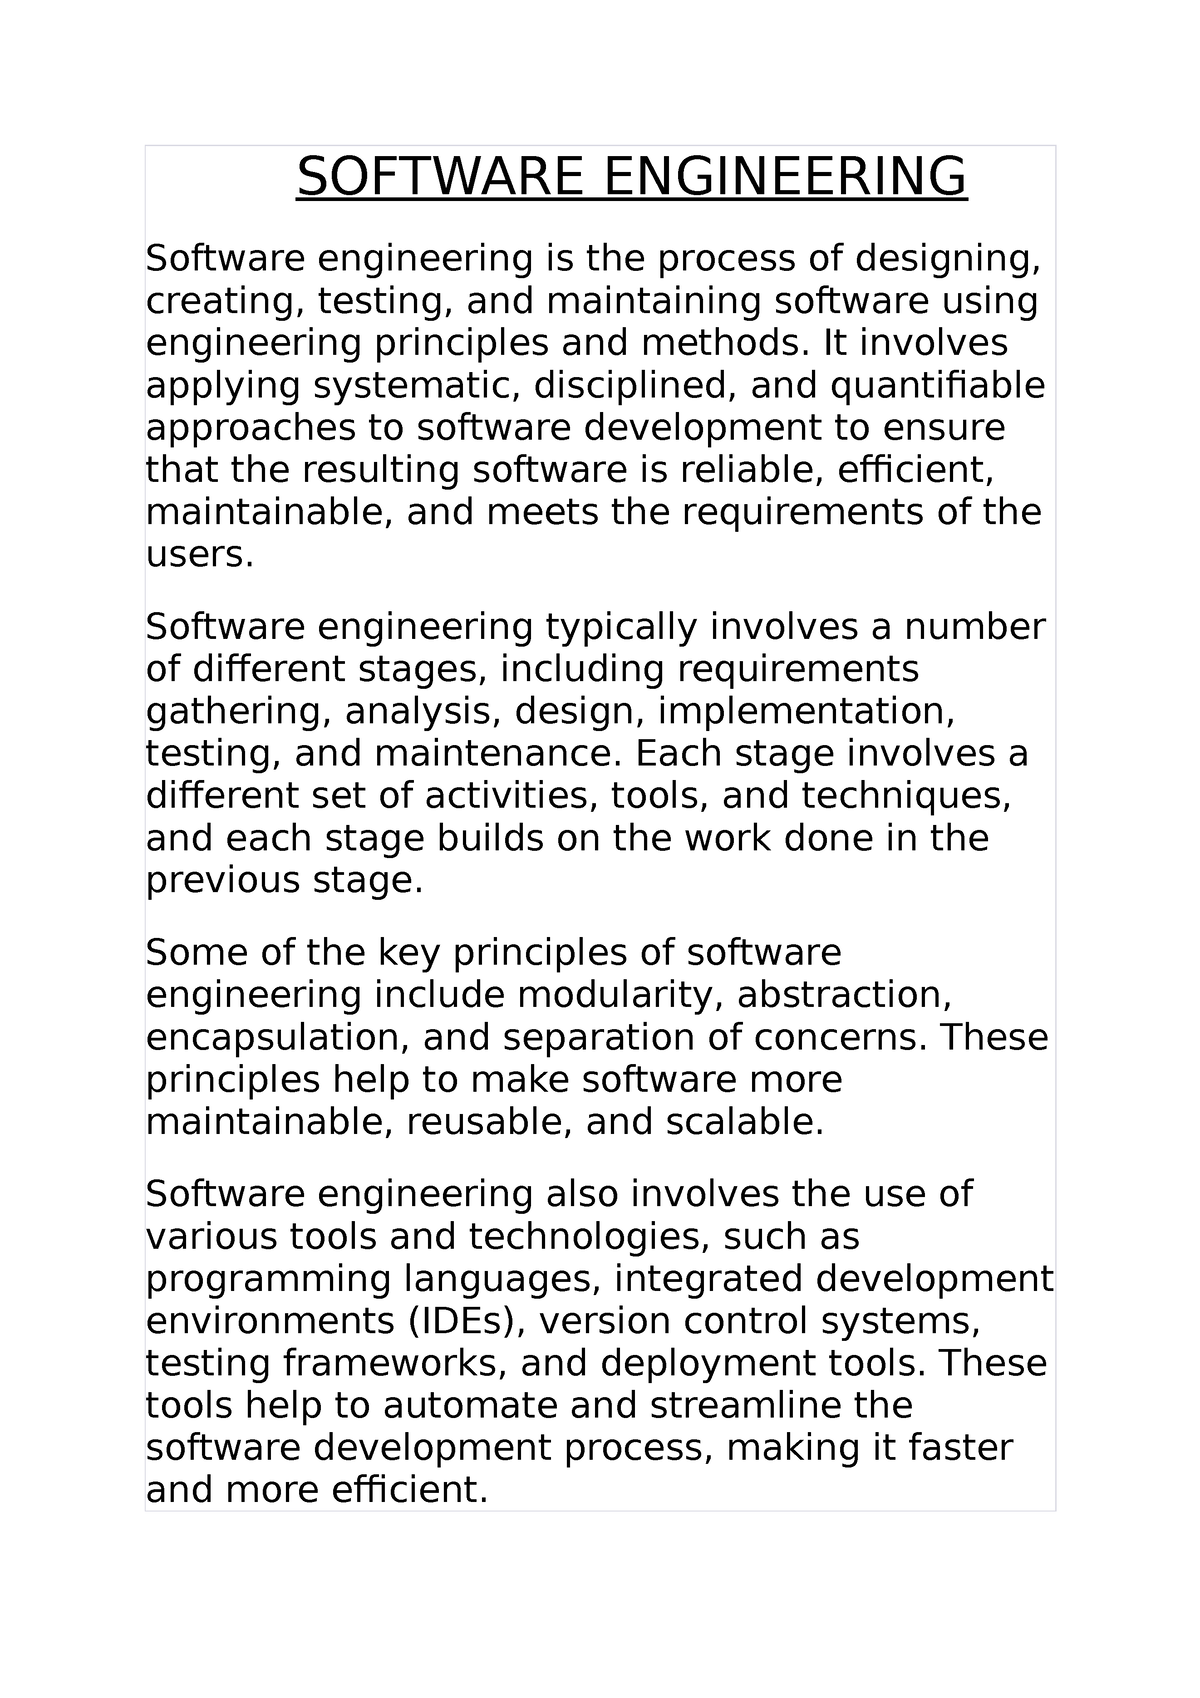 software engineering essay topics